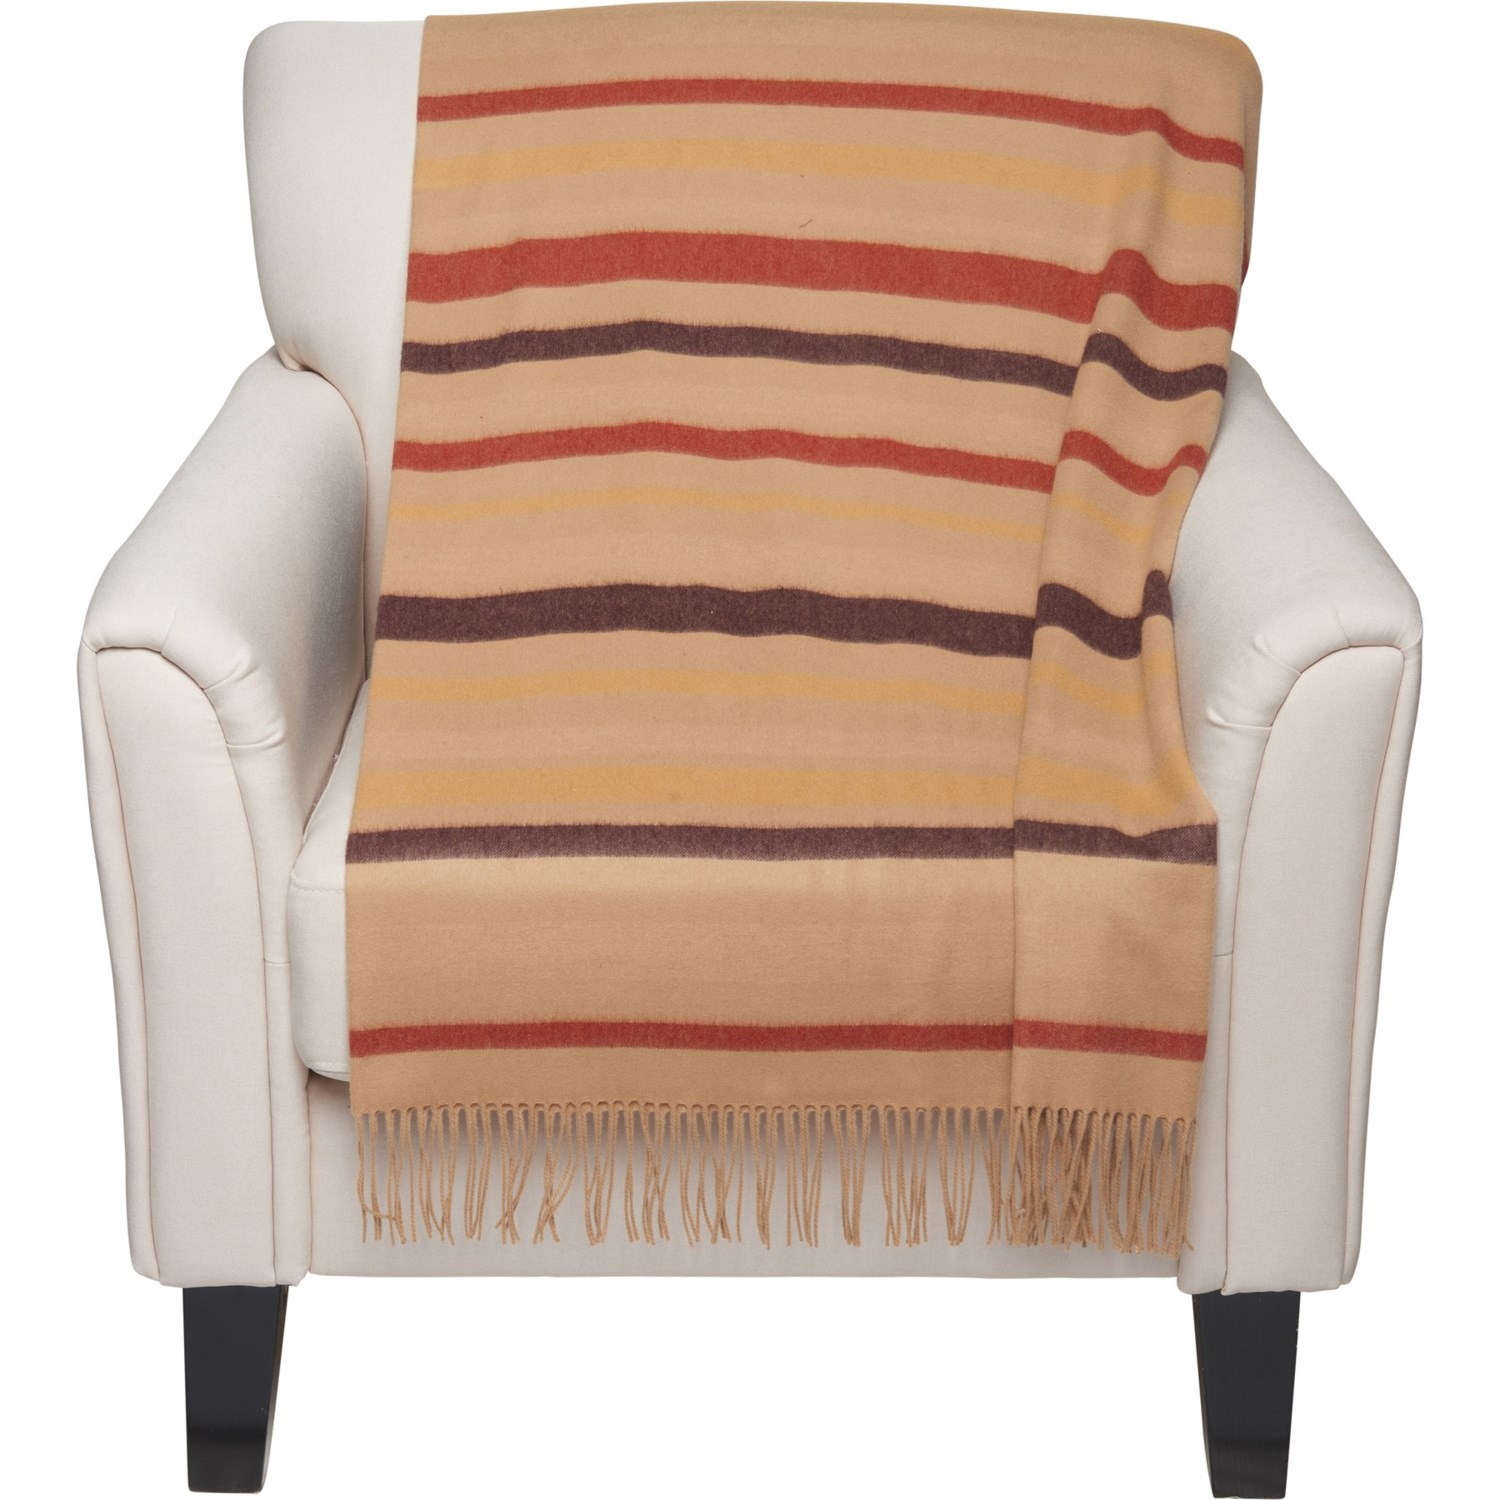 Royal Speyside 100% Cashmere Woven Weft Stripe Throw Blanket - 50x70”